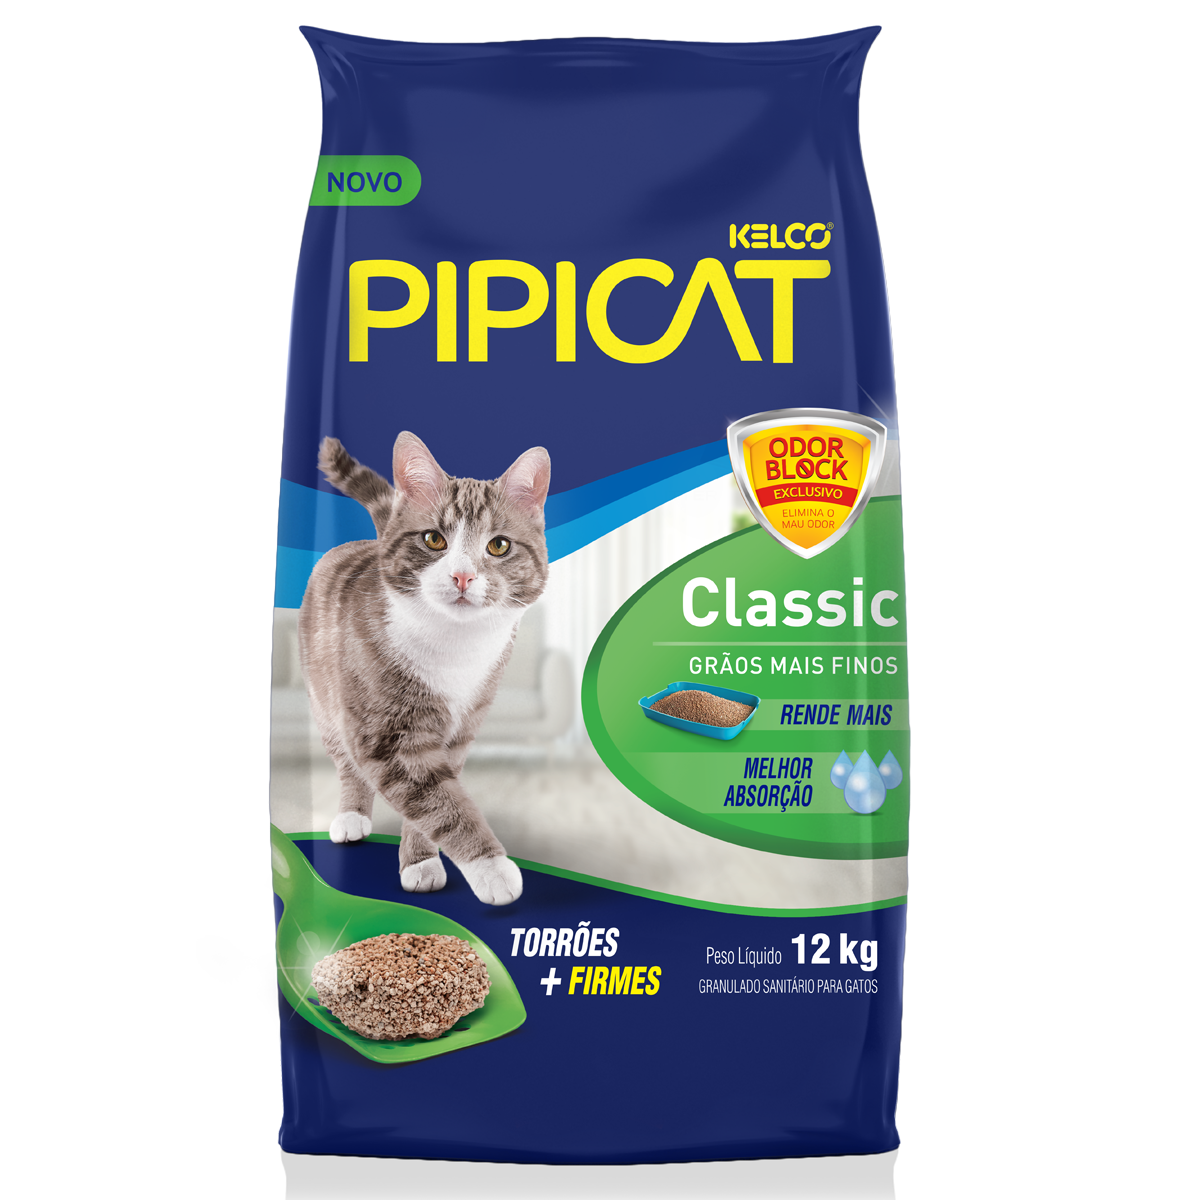 Pipicat Classic Odor Block 12kg